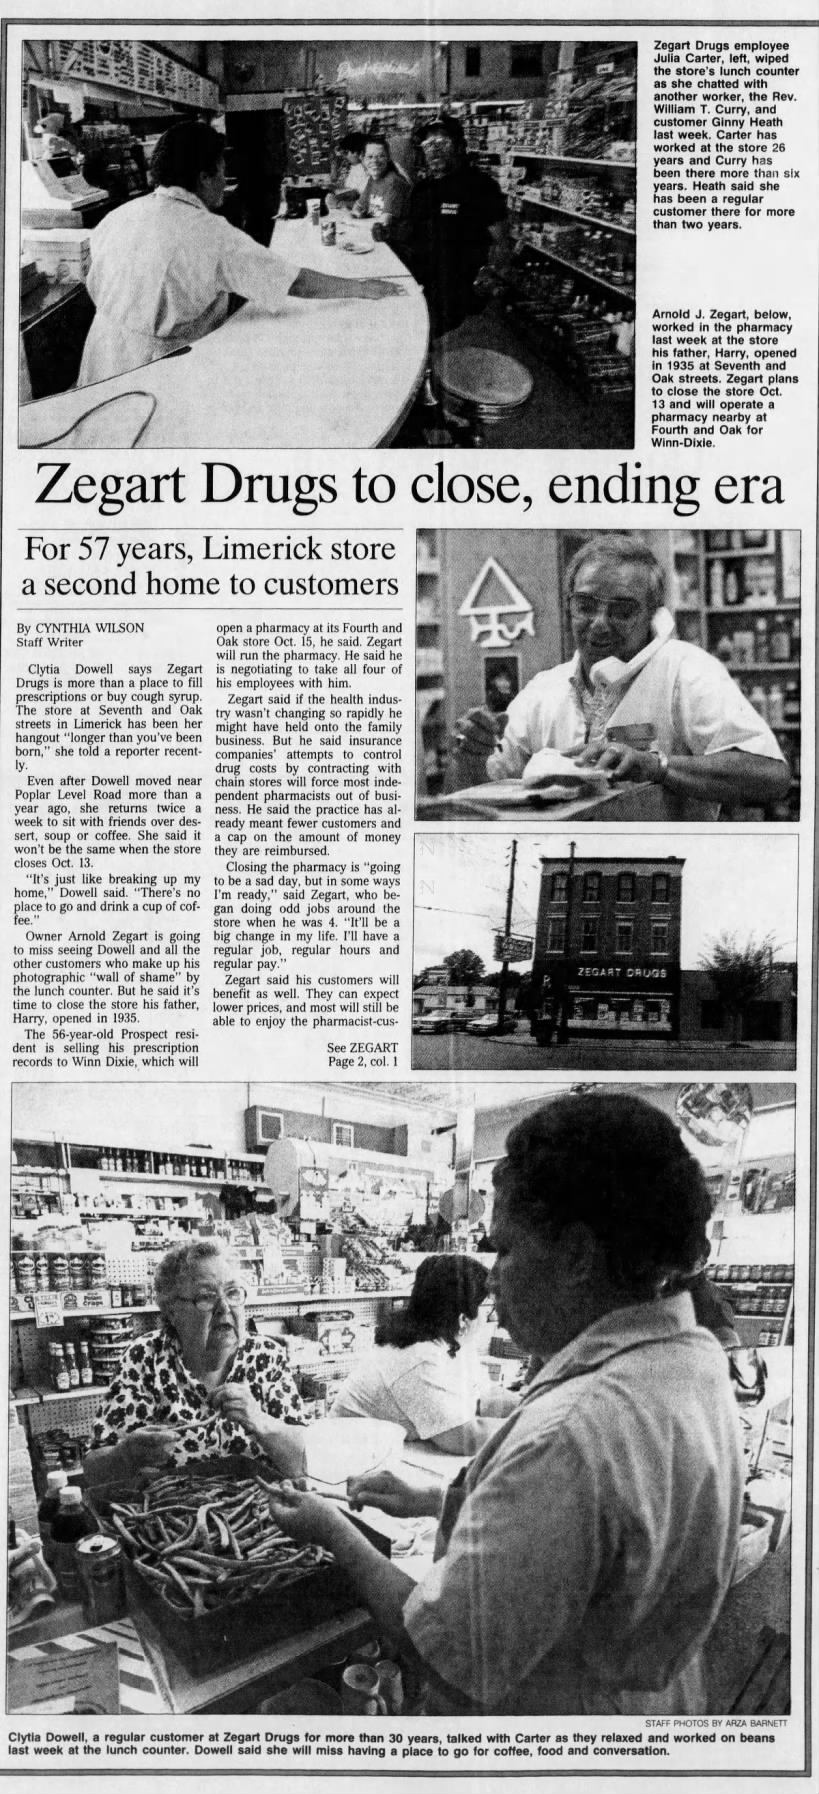 Zegart Drugs to close ending era 1992